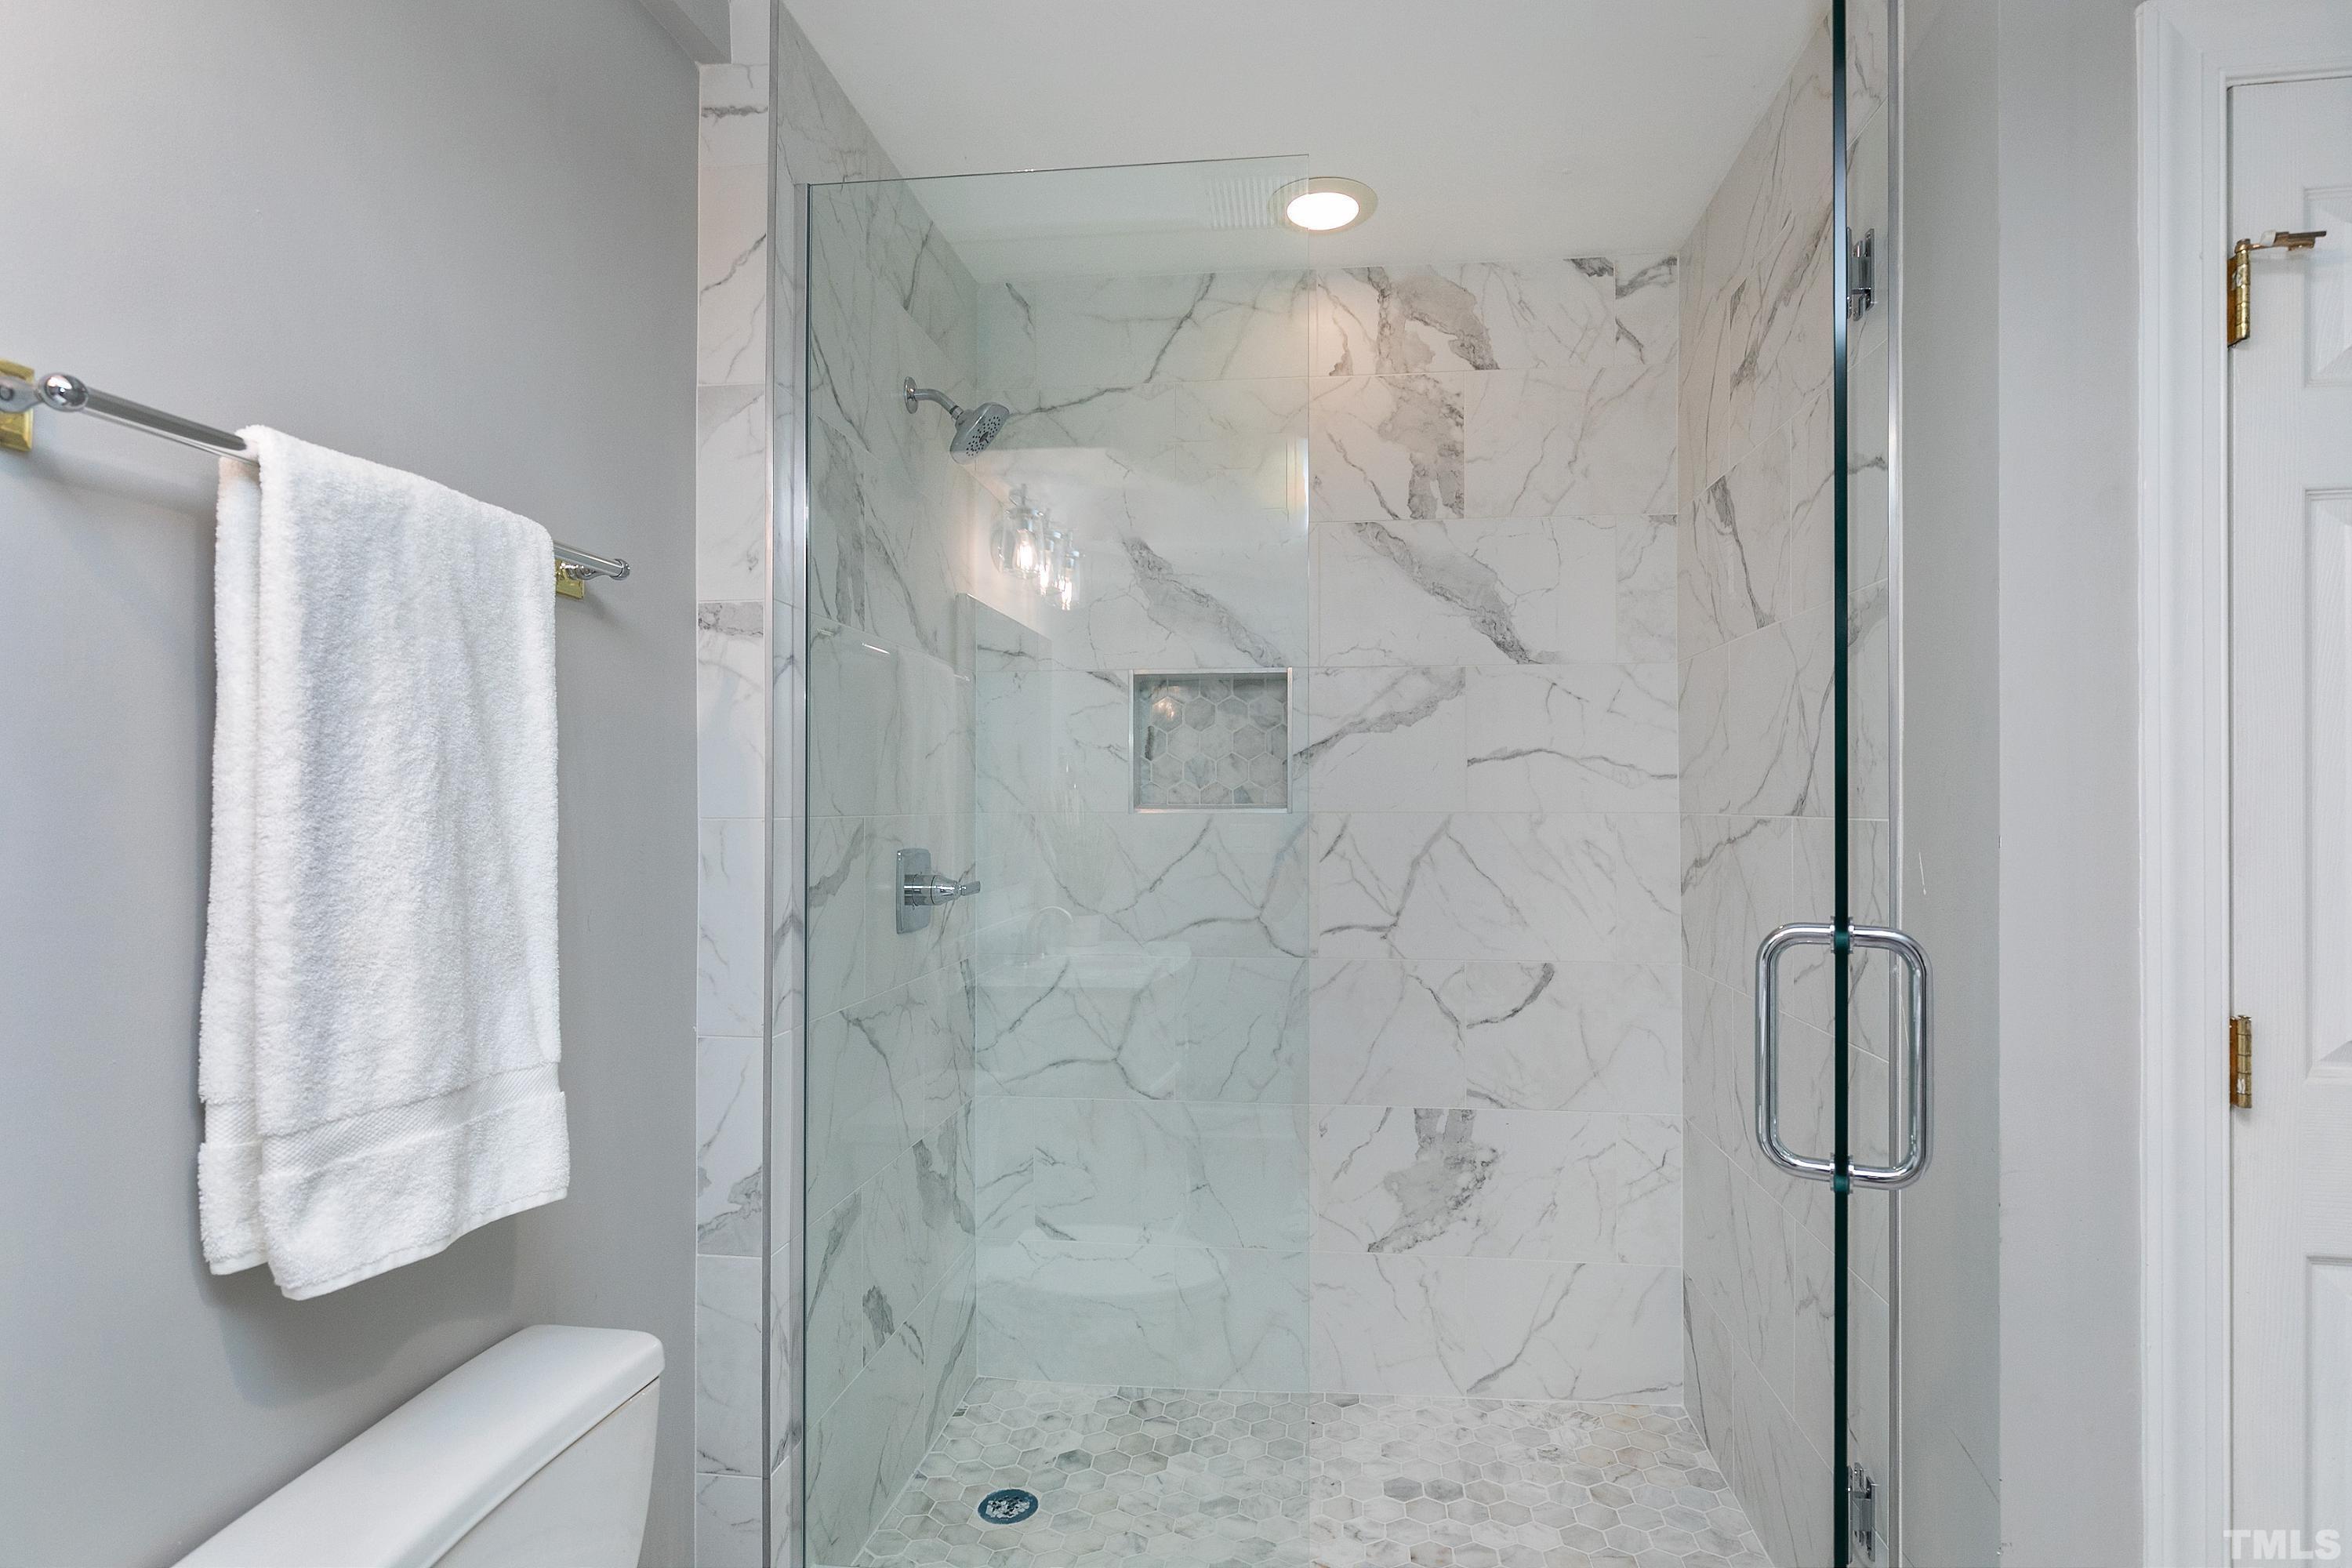 NEWLY RENOVATED FULL BATH with tiled walk in shower, new vanity & luxury vinyl plank floor.